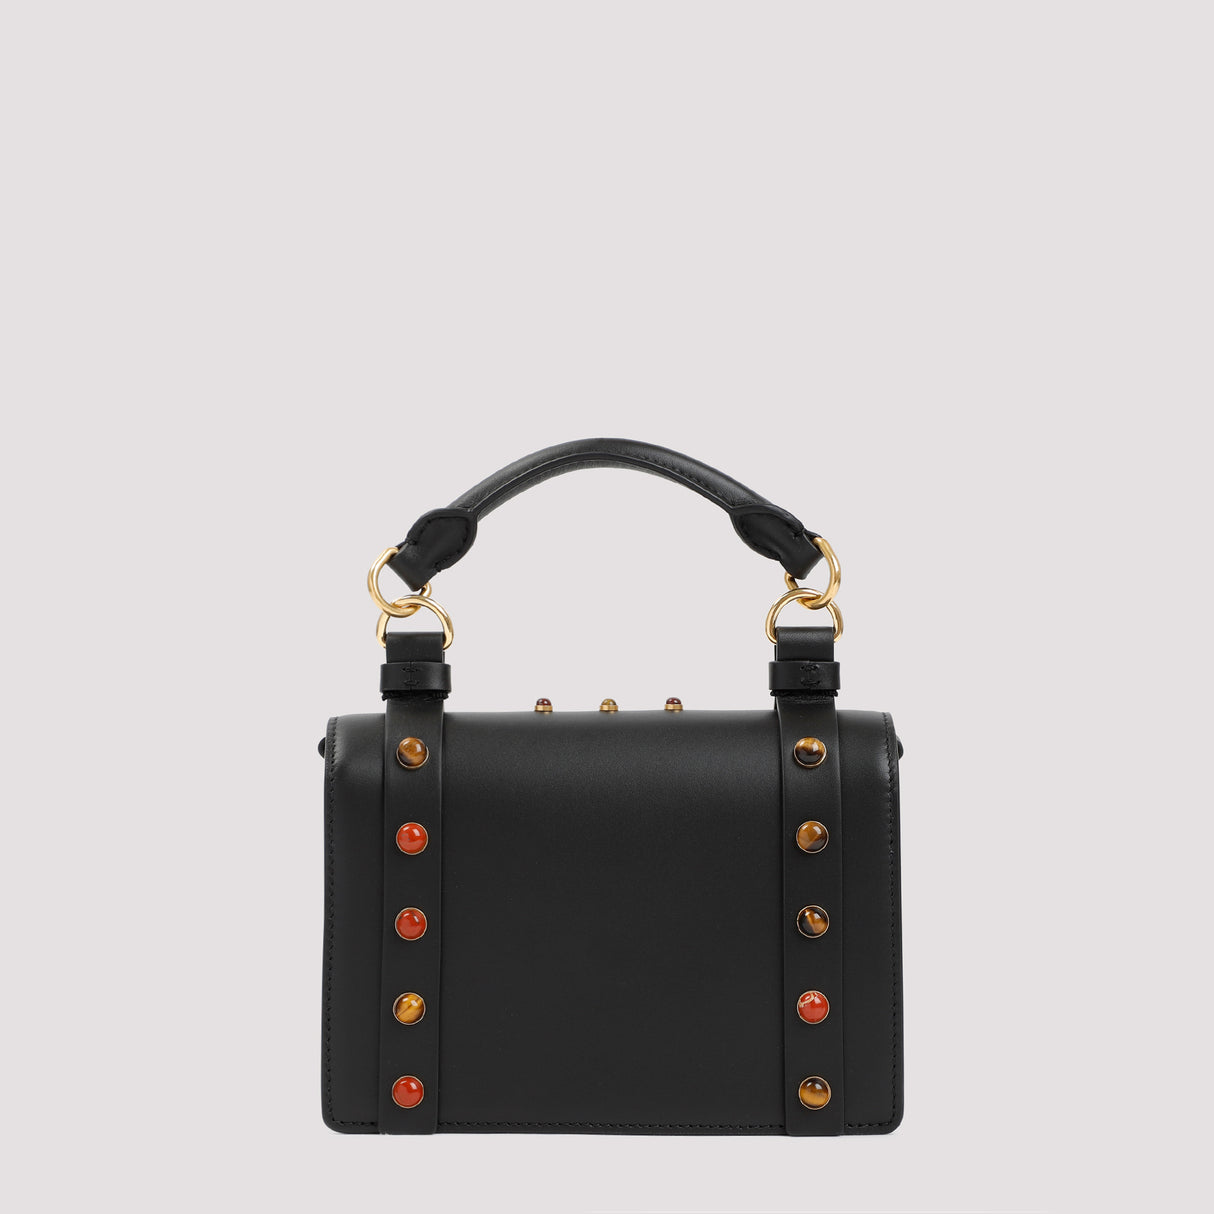 Black Leather Designer Handbag With Top Handle For Women